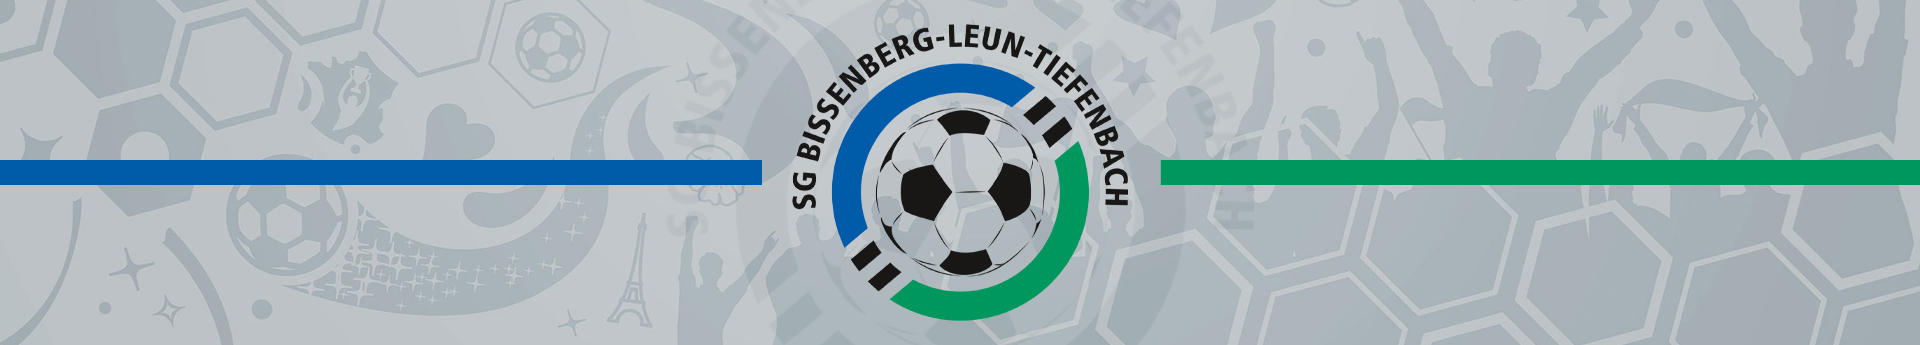 SG Bissenberg-Leun-Tiefenbach Title Image